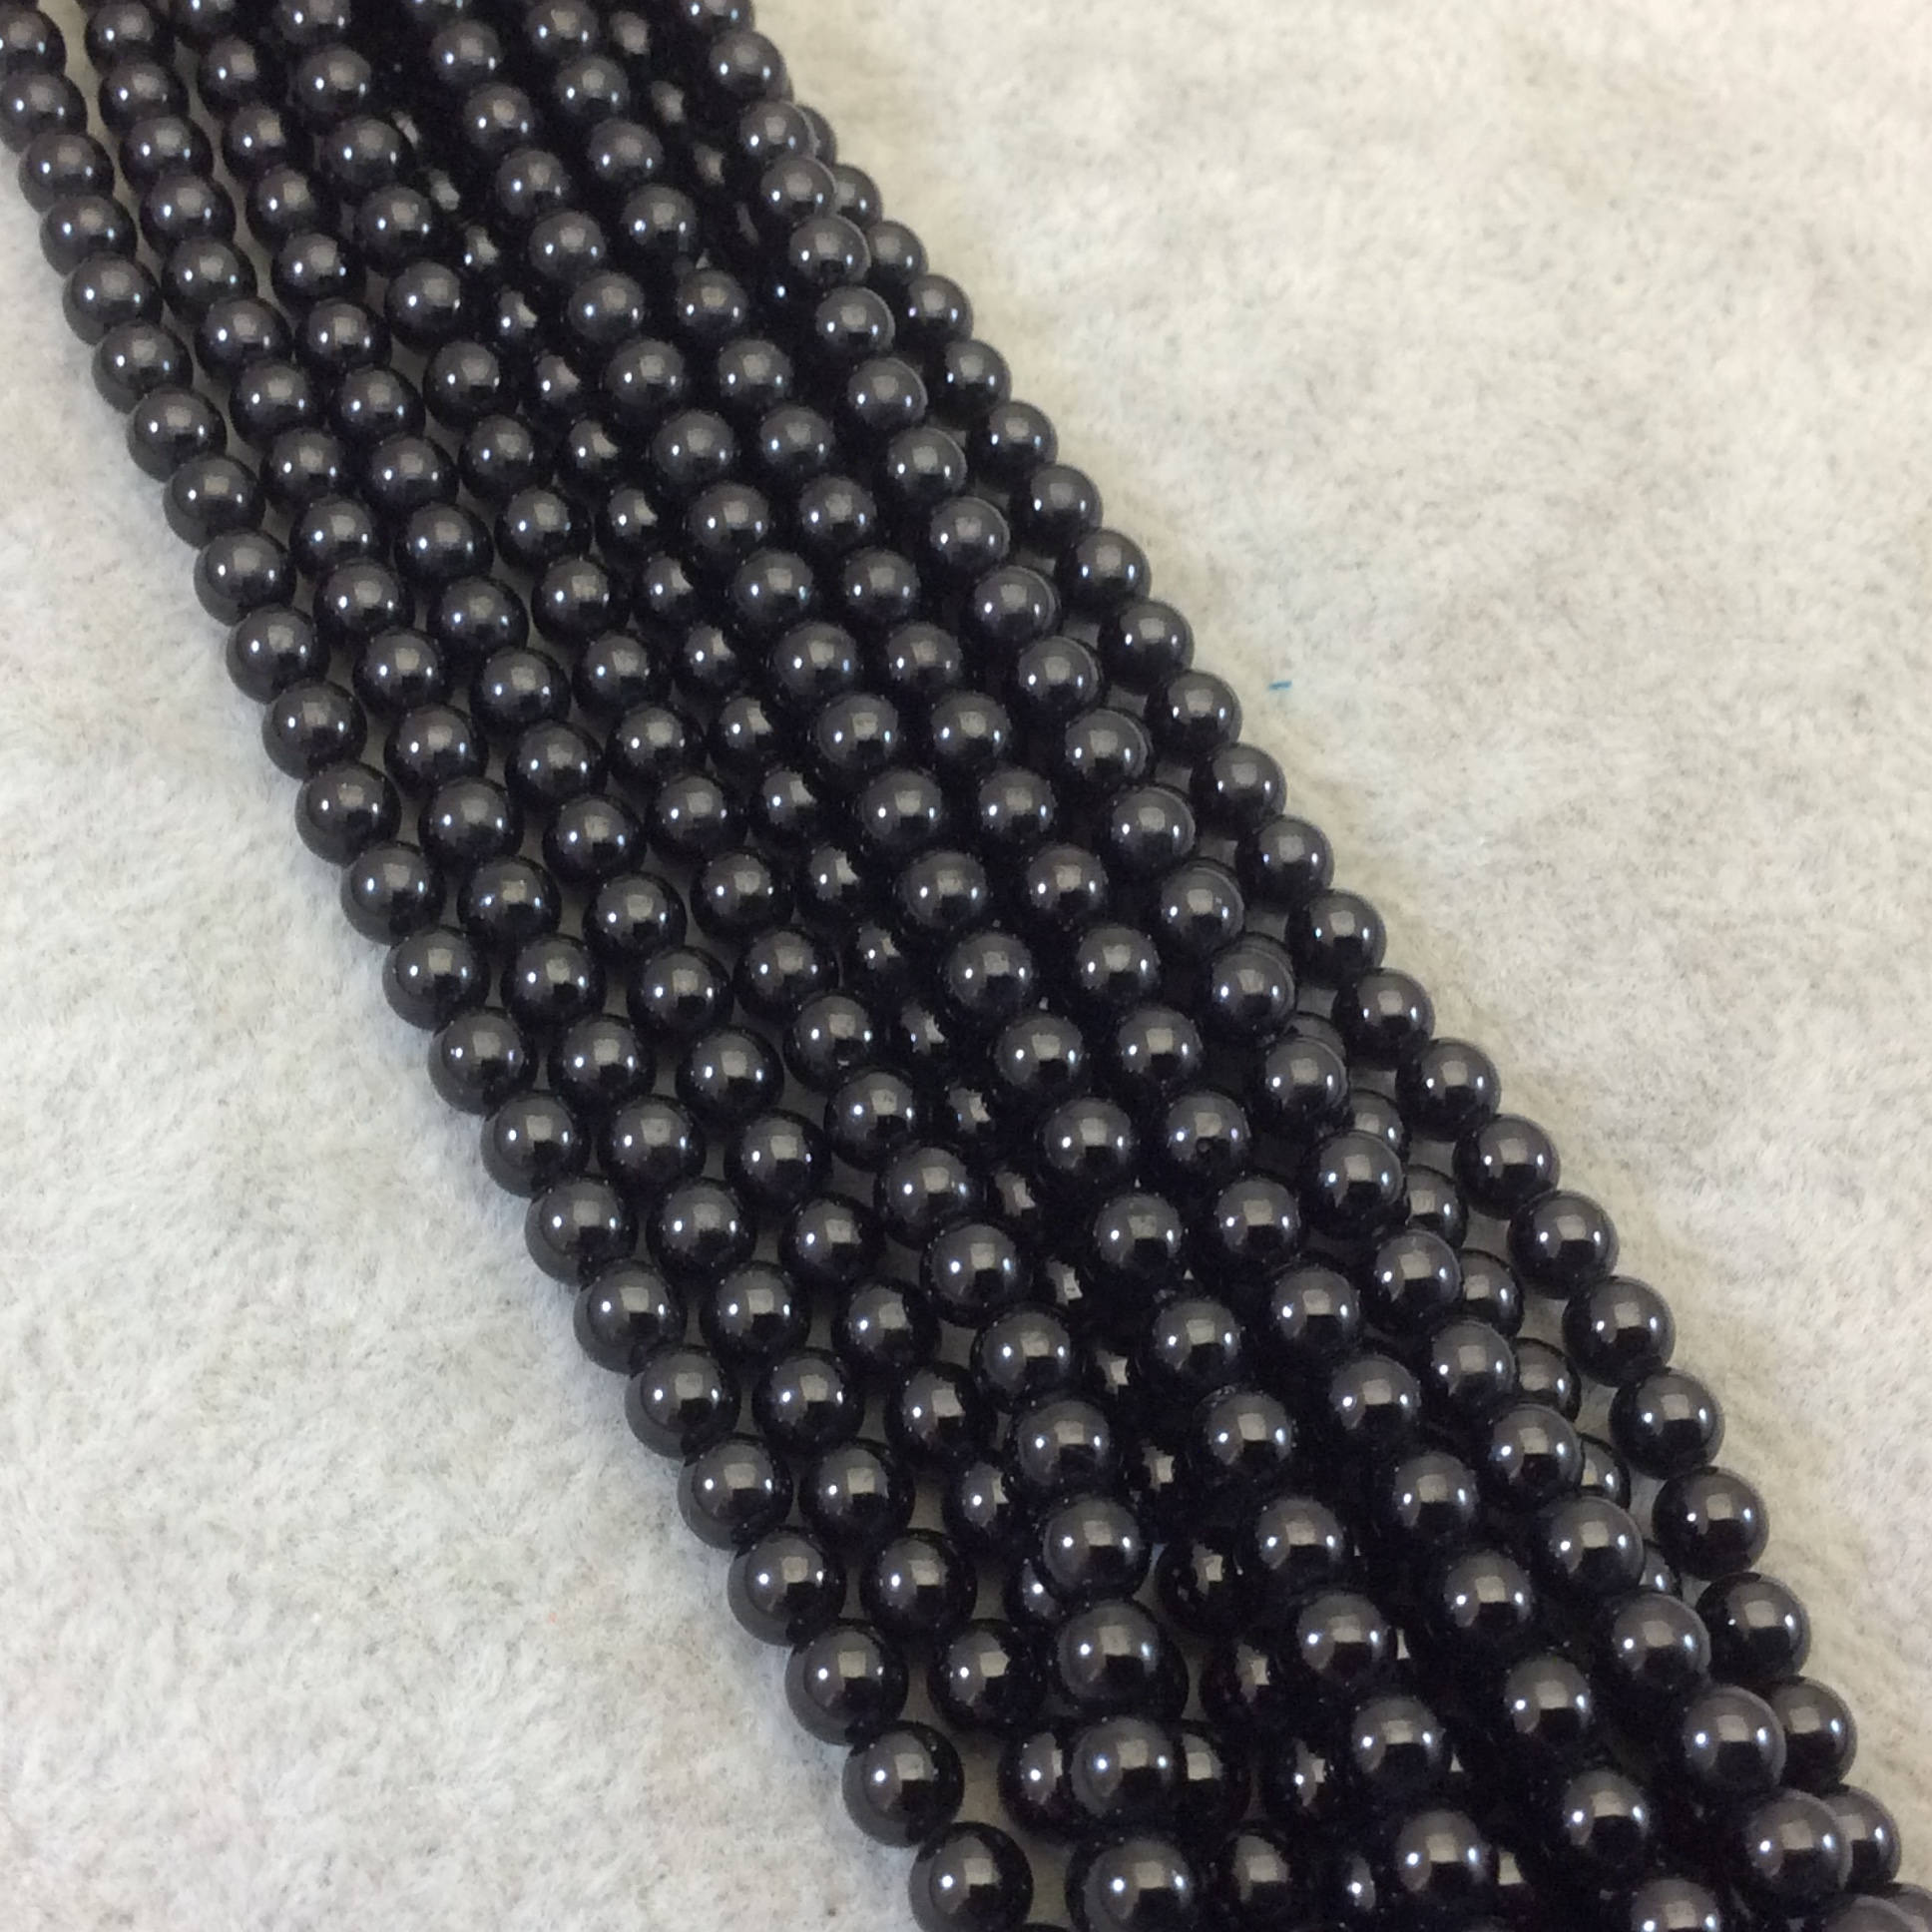 4mm Black Spinel Beads | High Quality Hand-cut Semi-precious Gemstone For Fine Jewelry